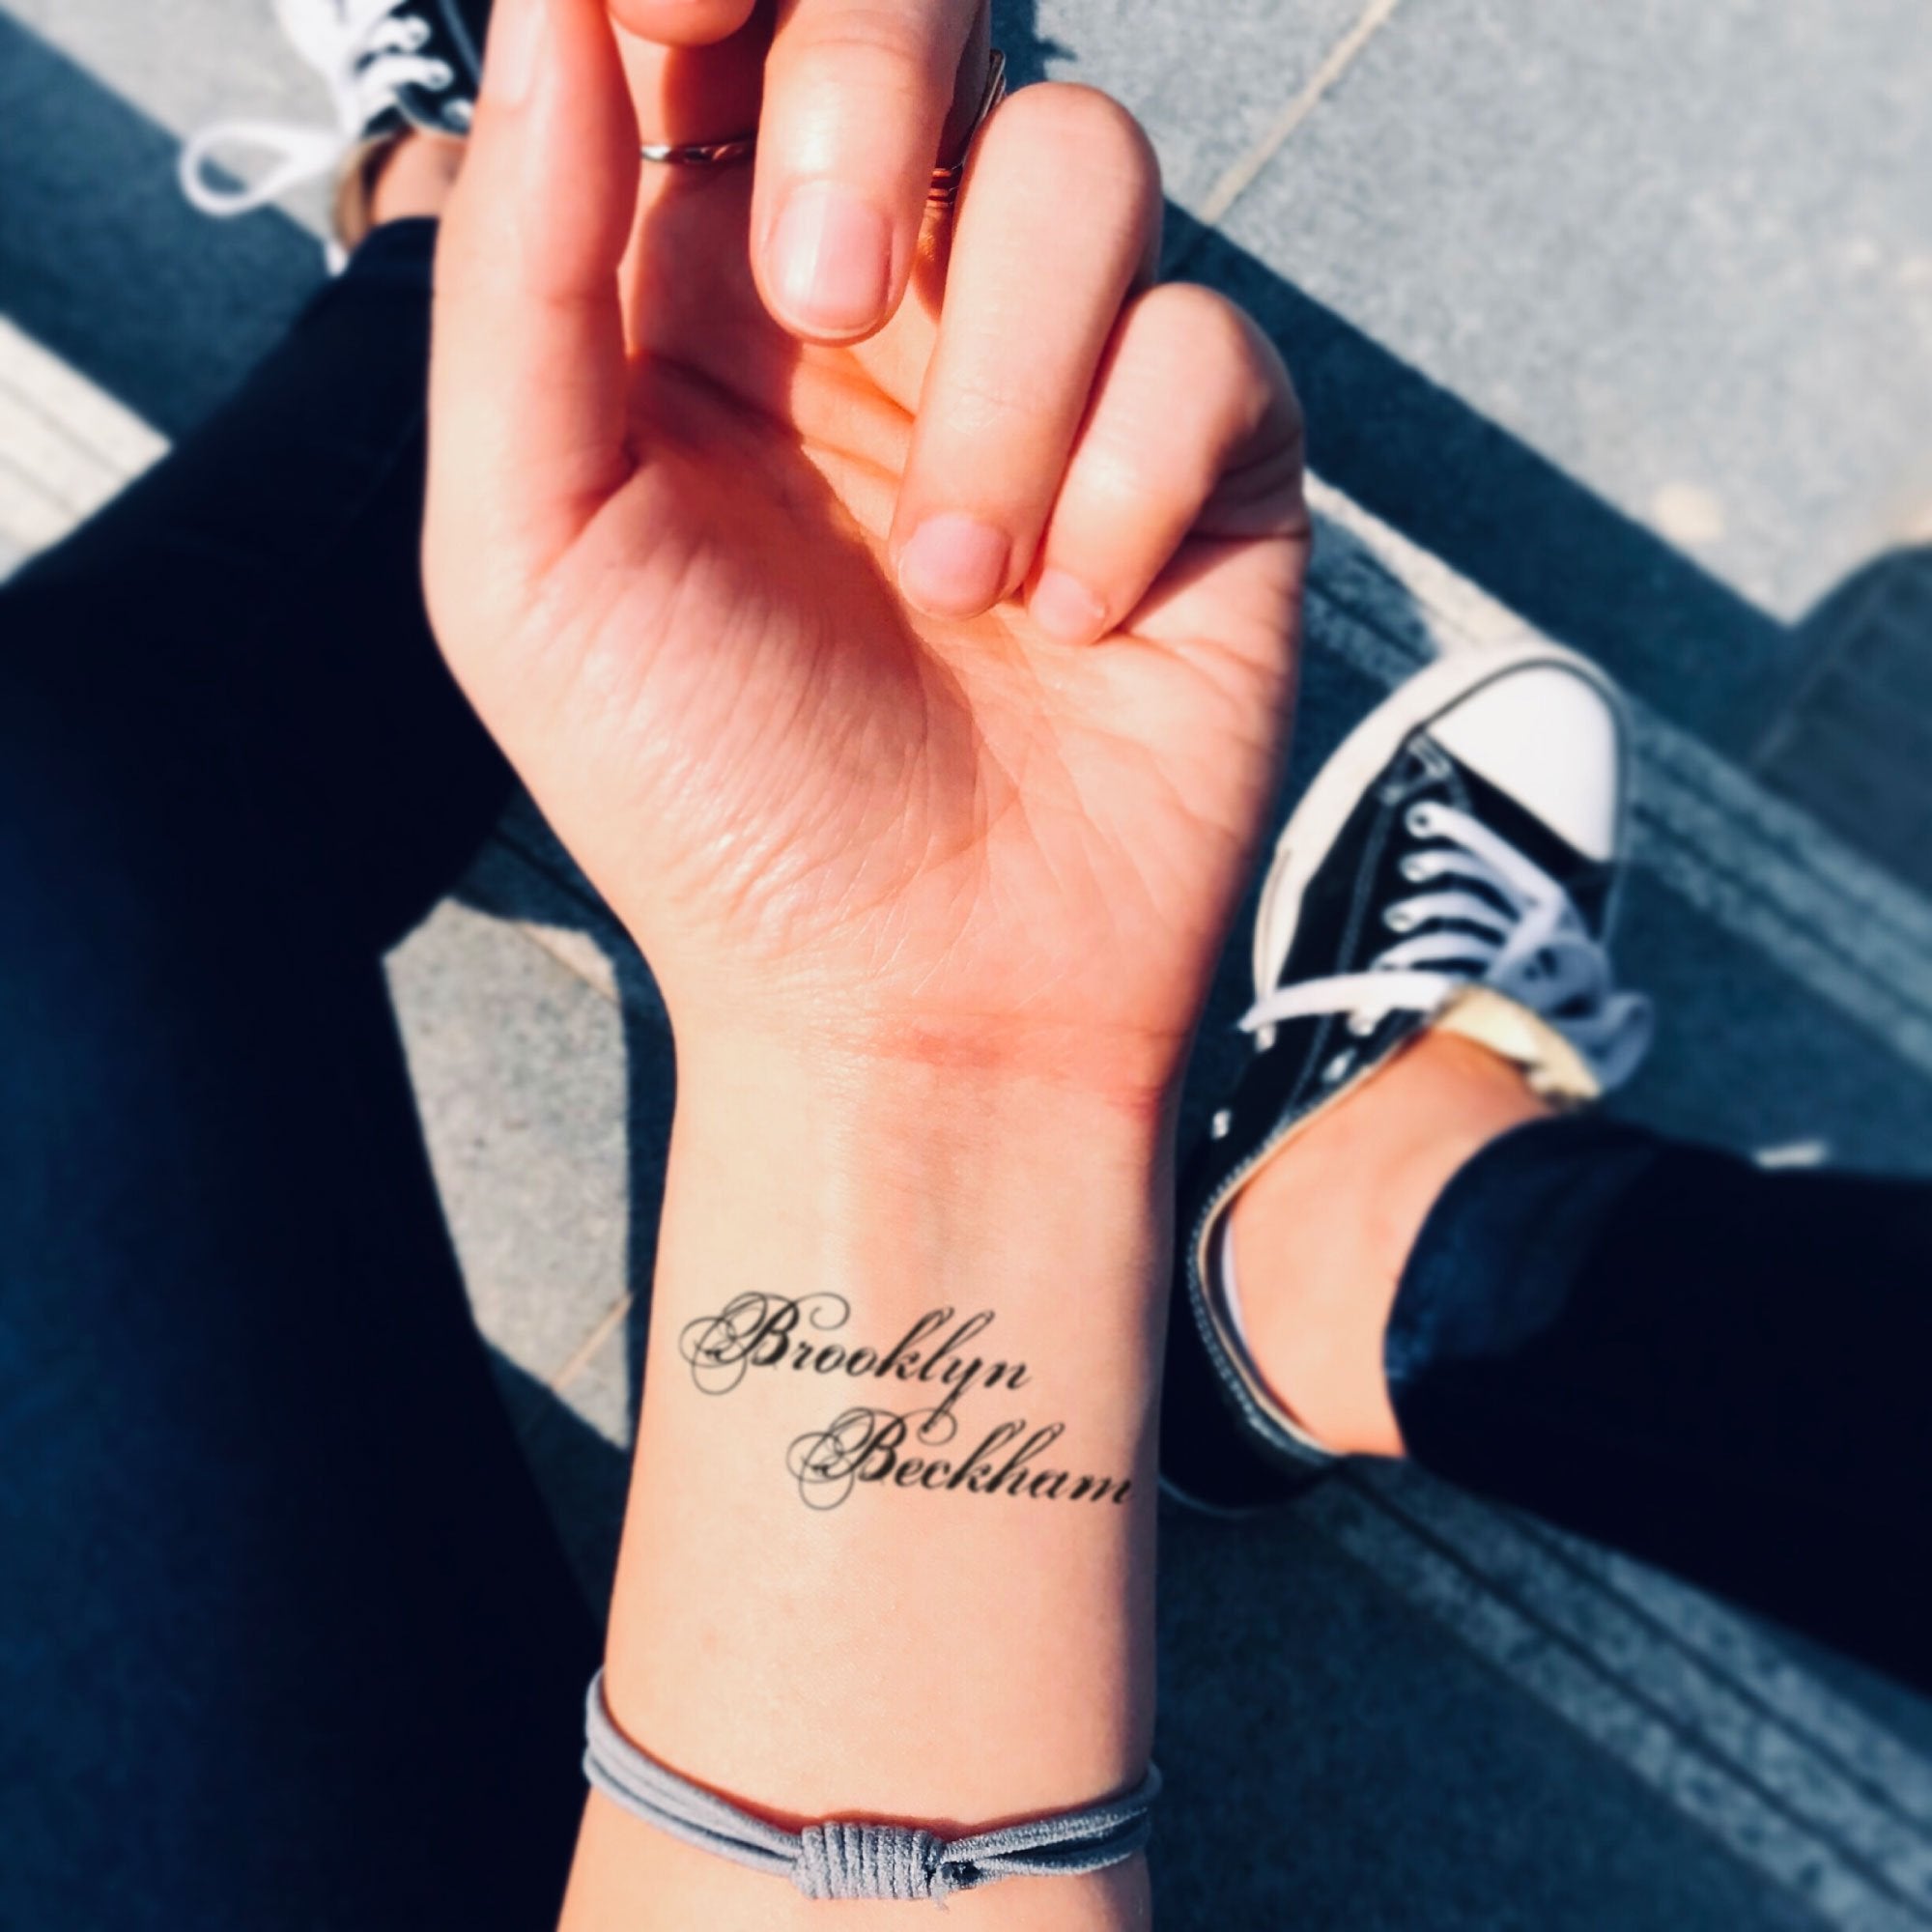 Victoria Caroline Beckham Text Tattoo